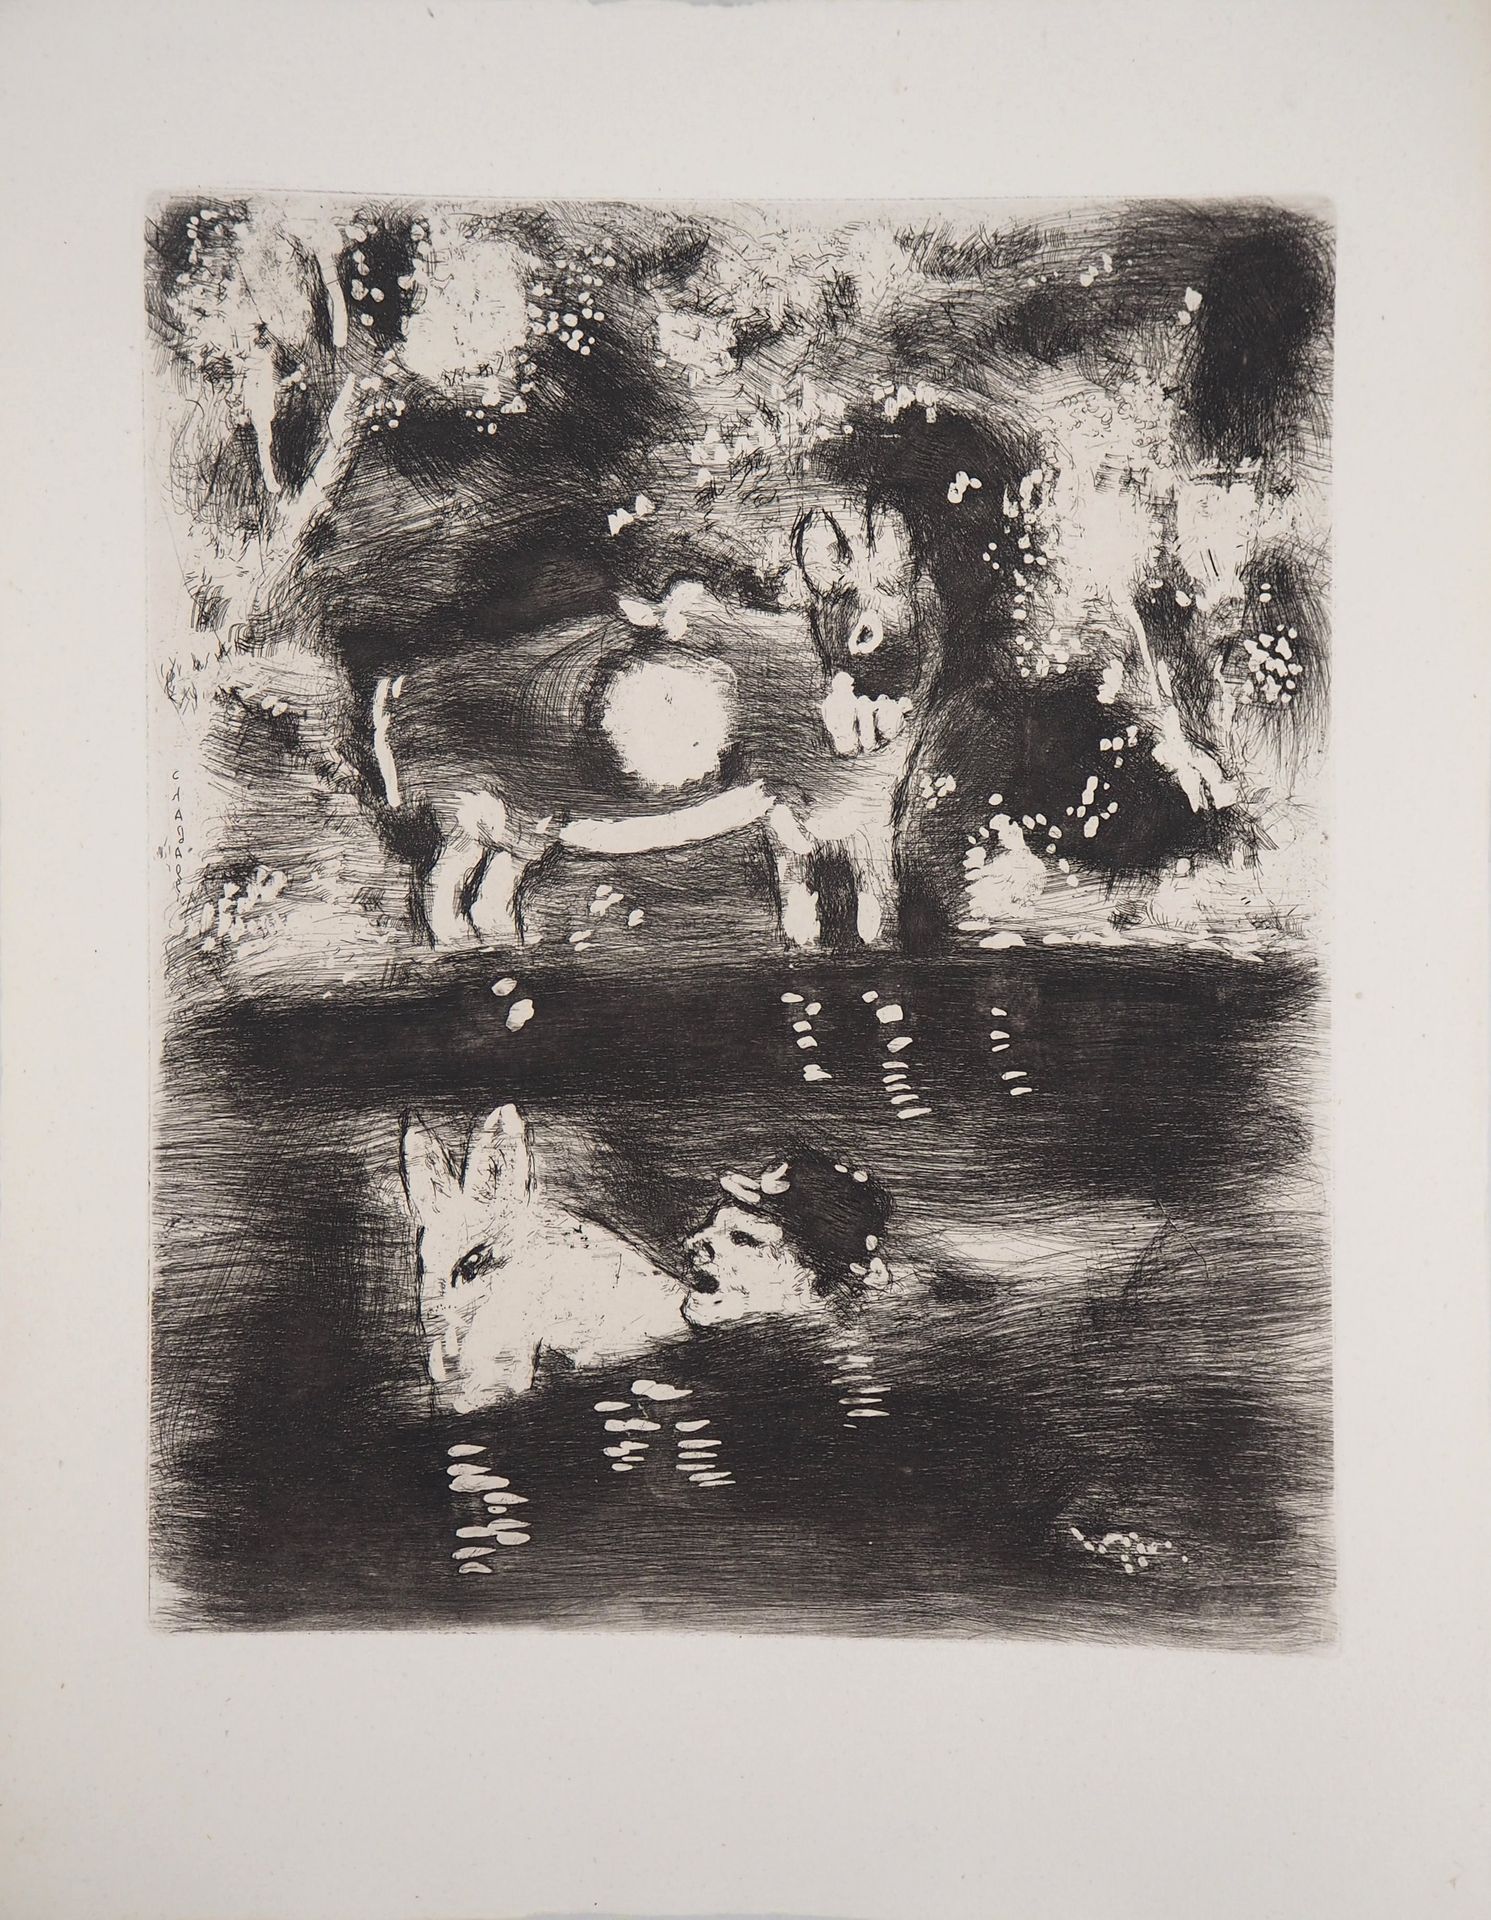 Marc Chagall 马克-夏加尔 (1887-1958)

喷泉的寓言：带海绵的驴子和带盐的驴子, 1952年

原始蚀刻画

板块中的签名

蒙瓦尔牛皮&hellip;